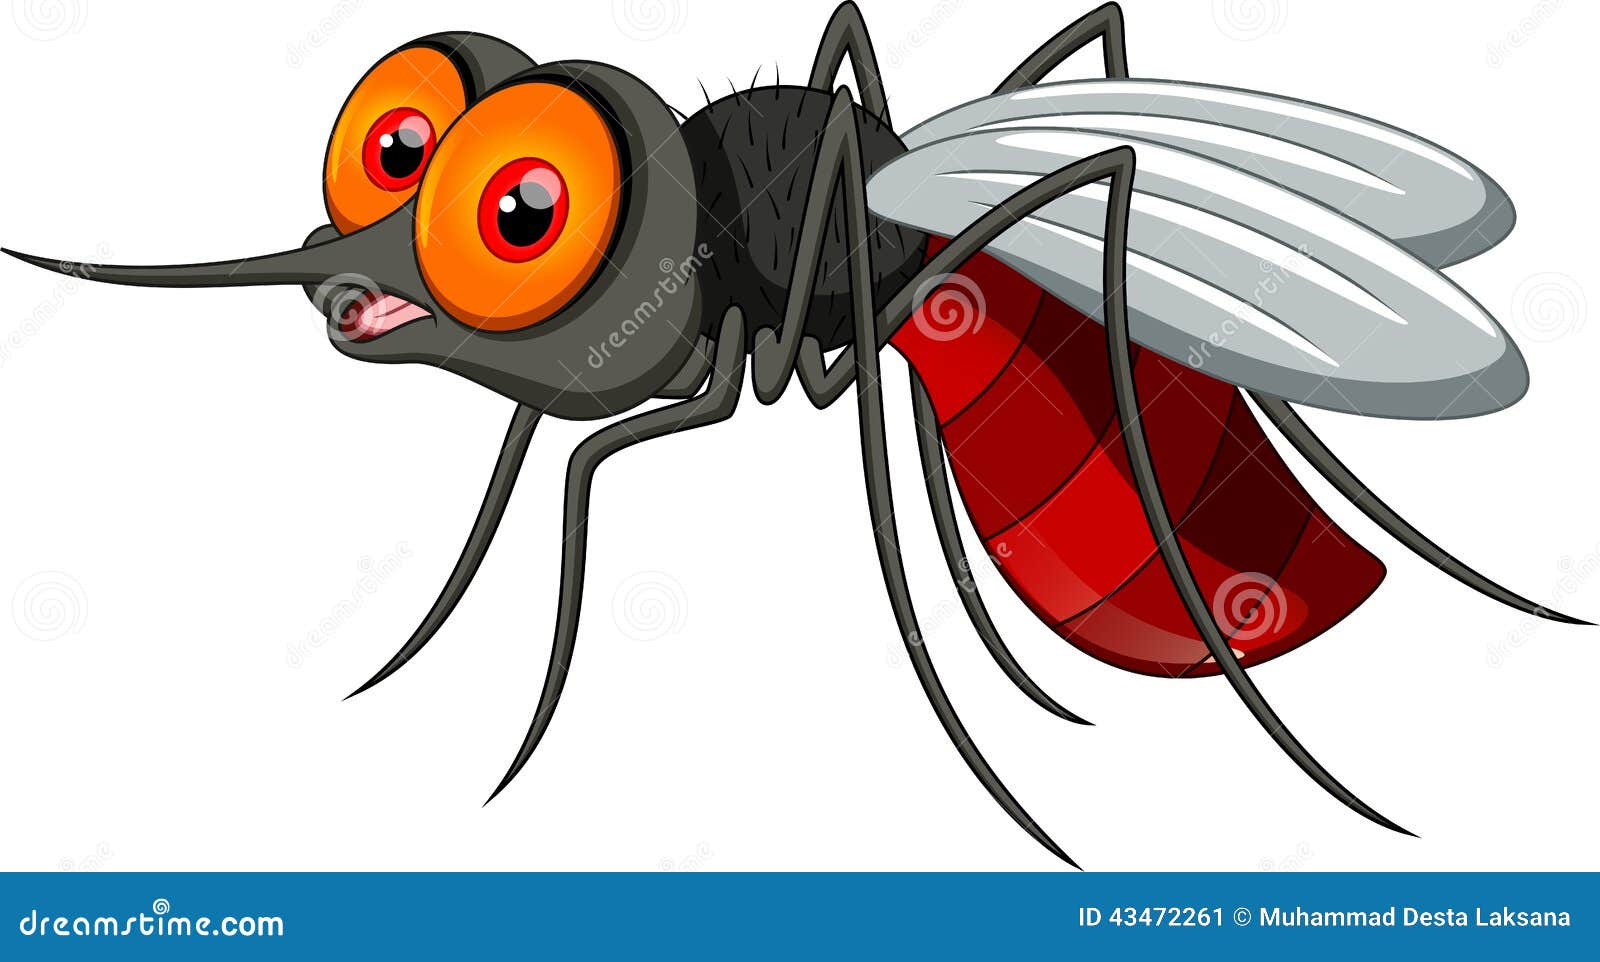 clipart mosquito cartoon - photo #15